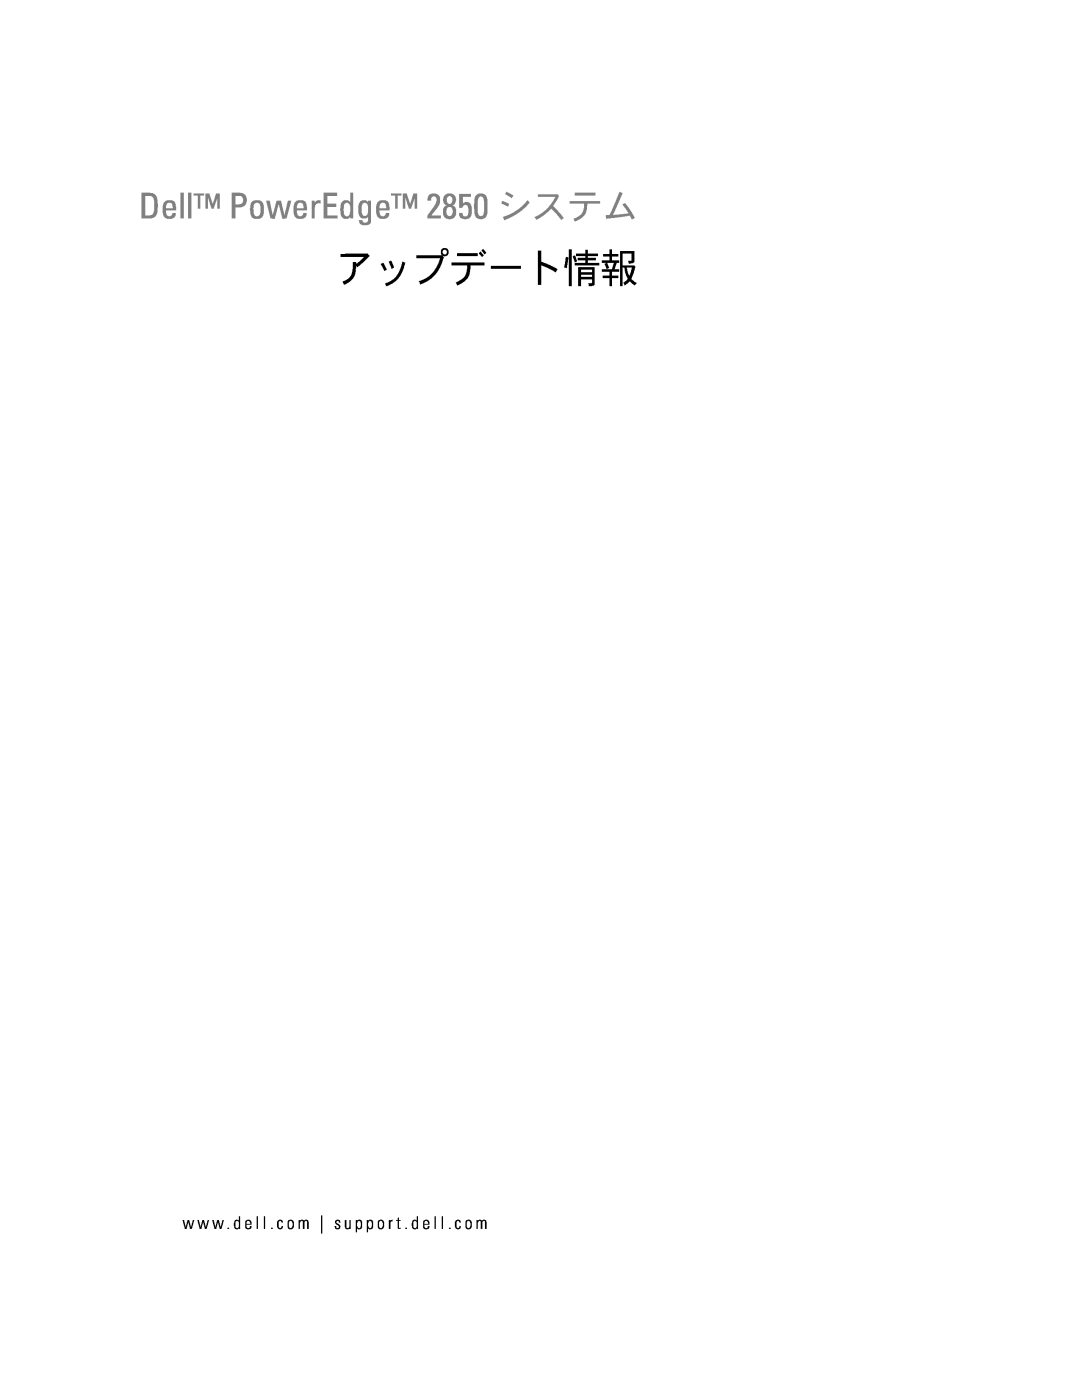 Dell manual Dell PowerEdge 2850 システム, アップデート情報, w w w . d e l l . c o m s u p p o r t . d e l l . c o m 